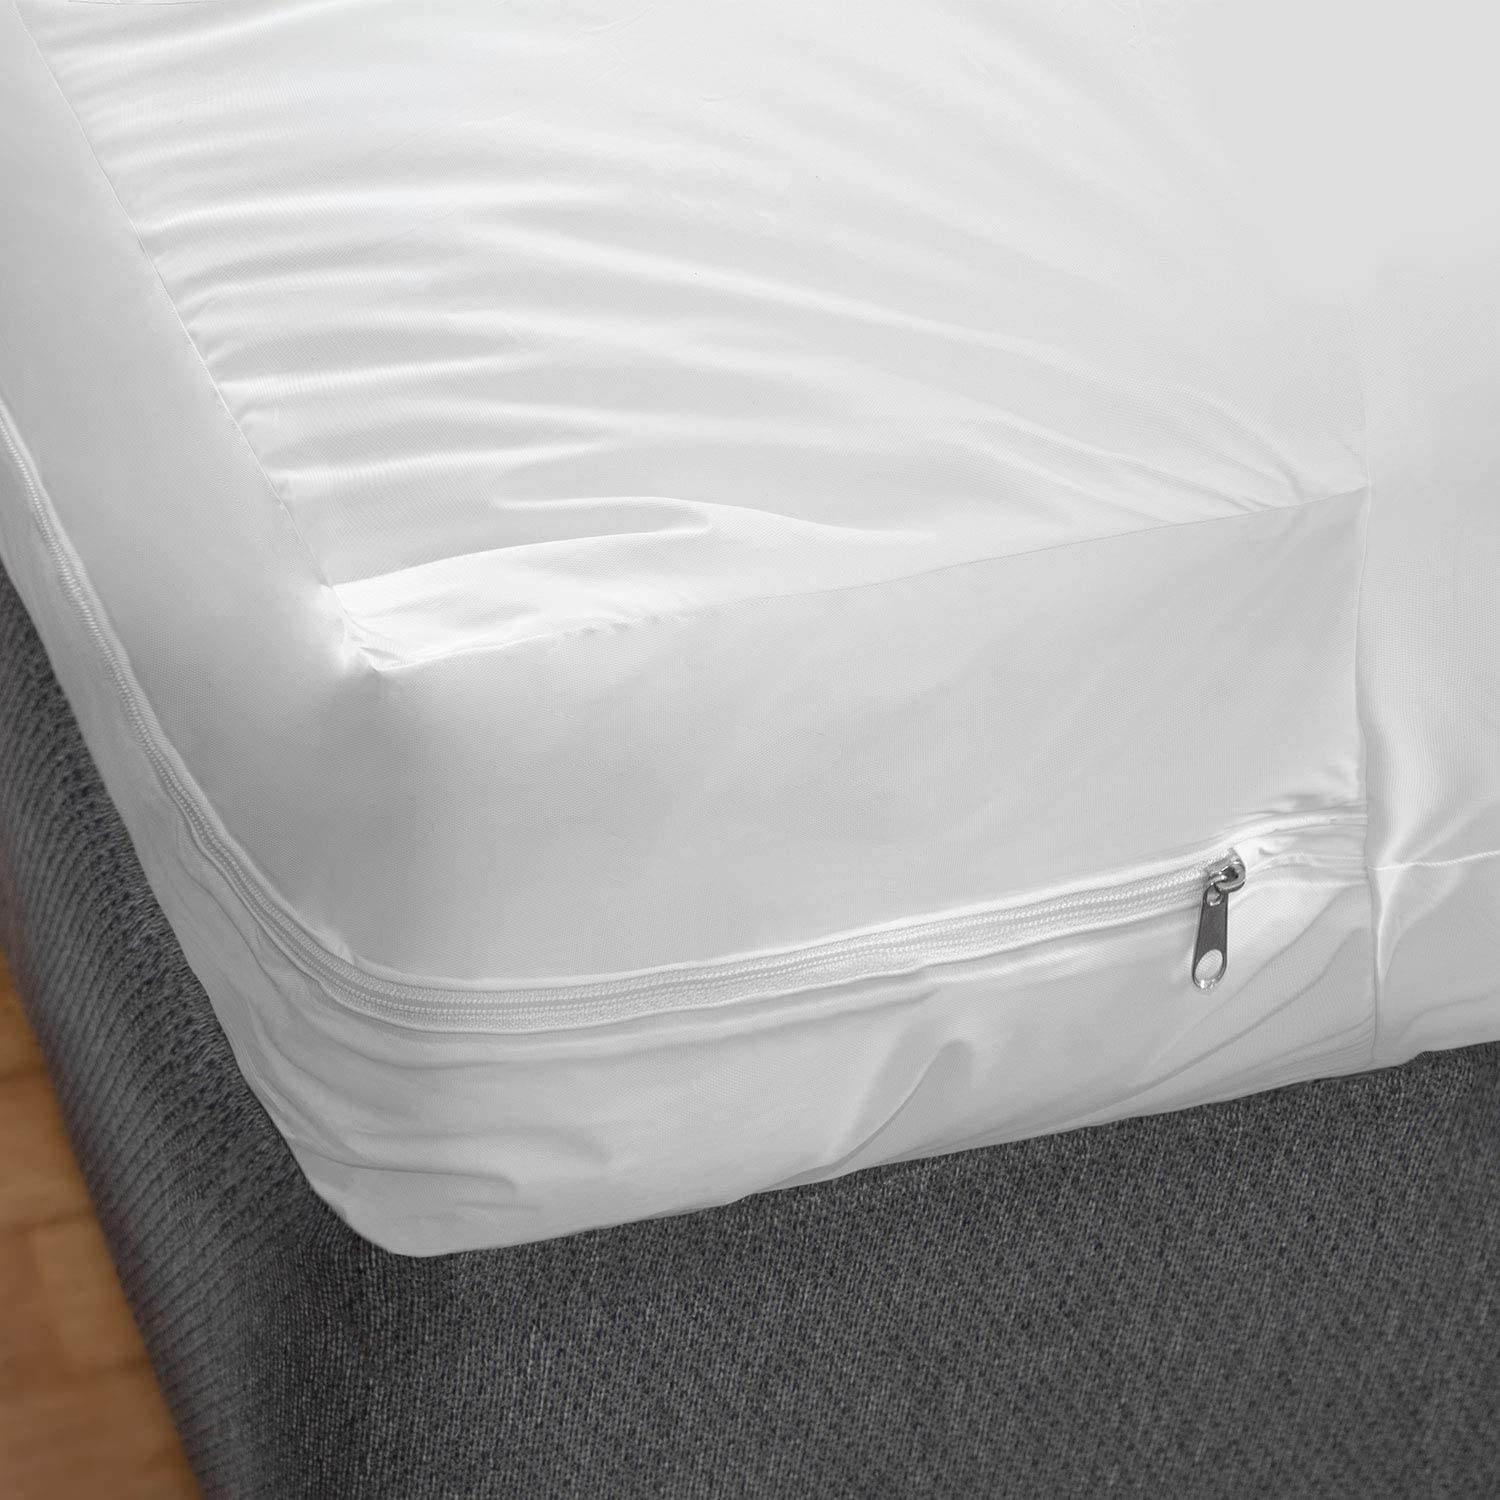 trundle bed mattress depth